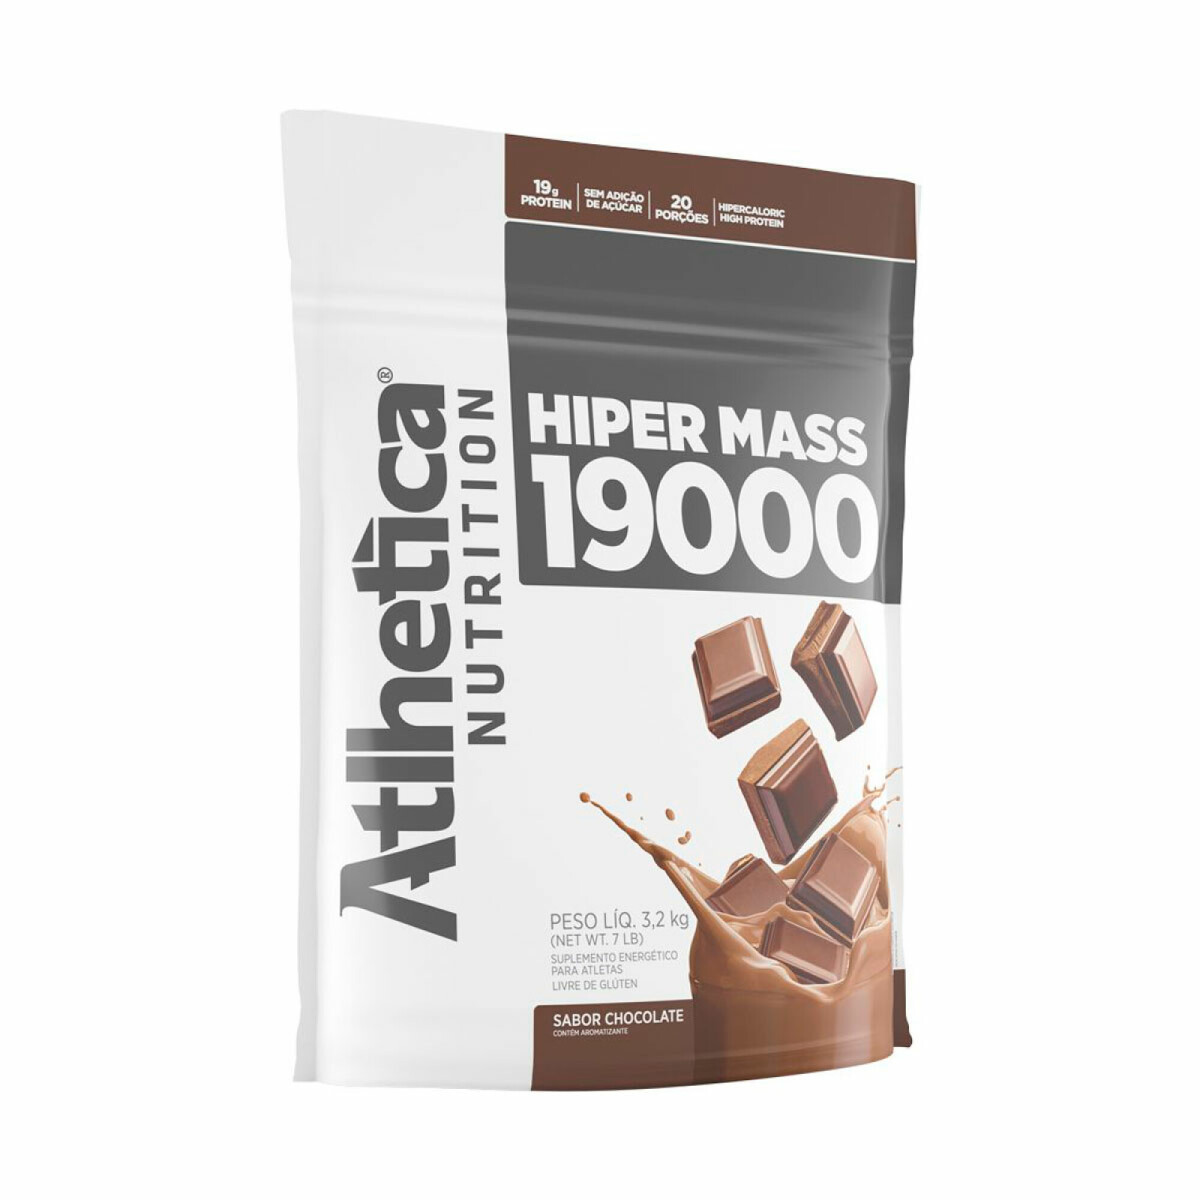 Suplemento Atlhetica Hiper Mass 19000 3,2KG - CHOCOLATE 